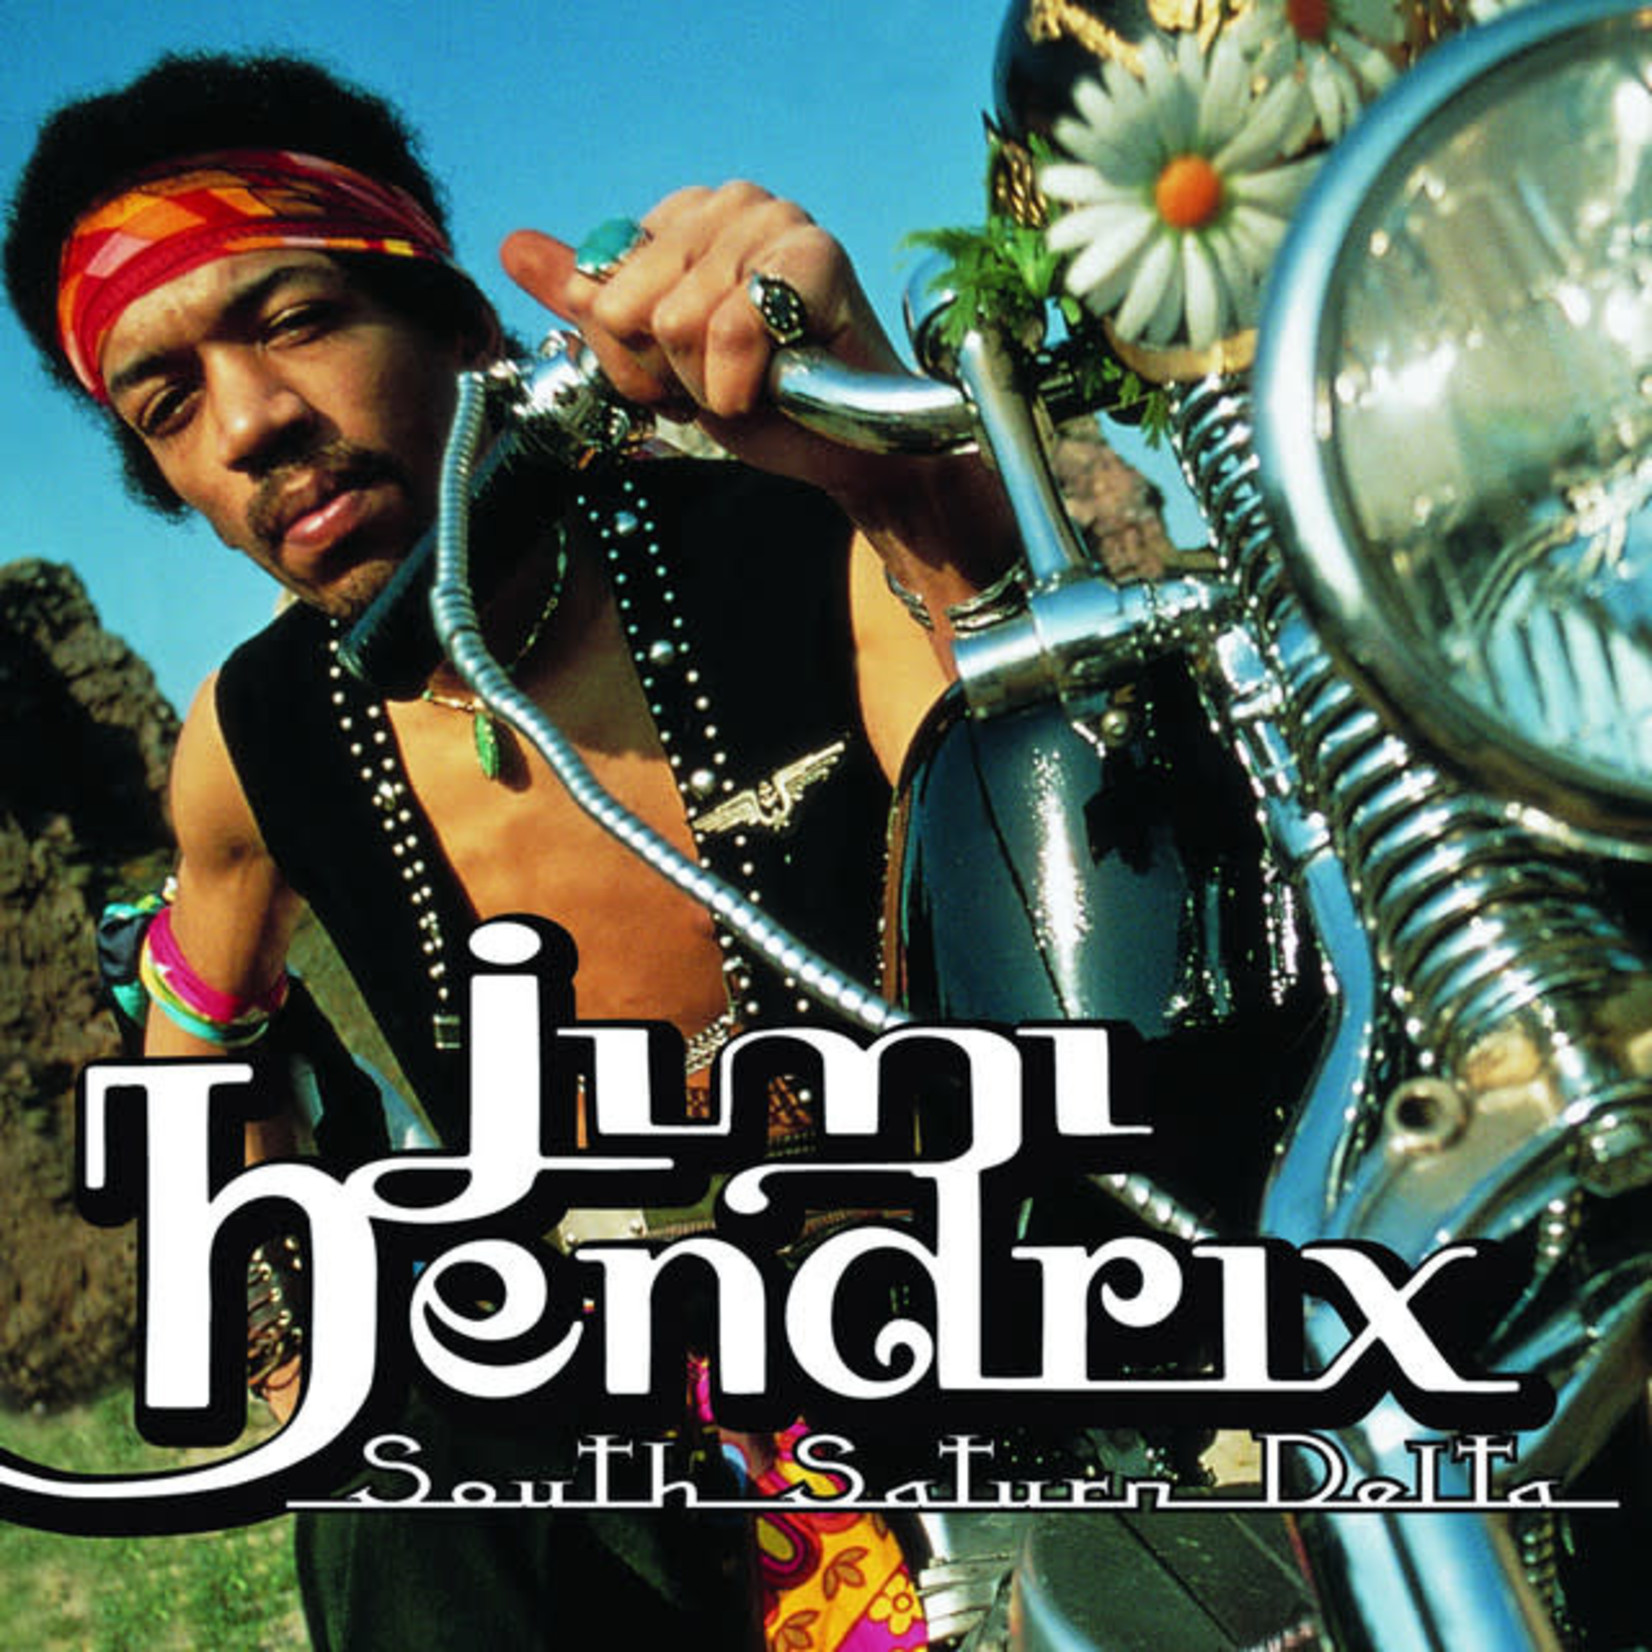 Vinyl Jimi Hendrix - South Saturn Delta